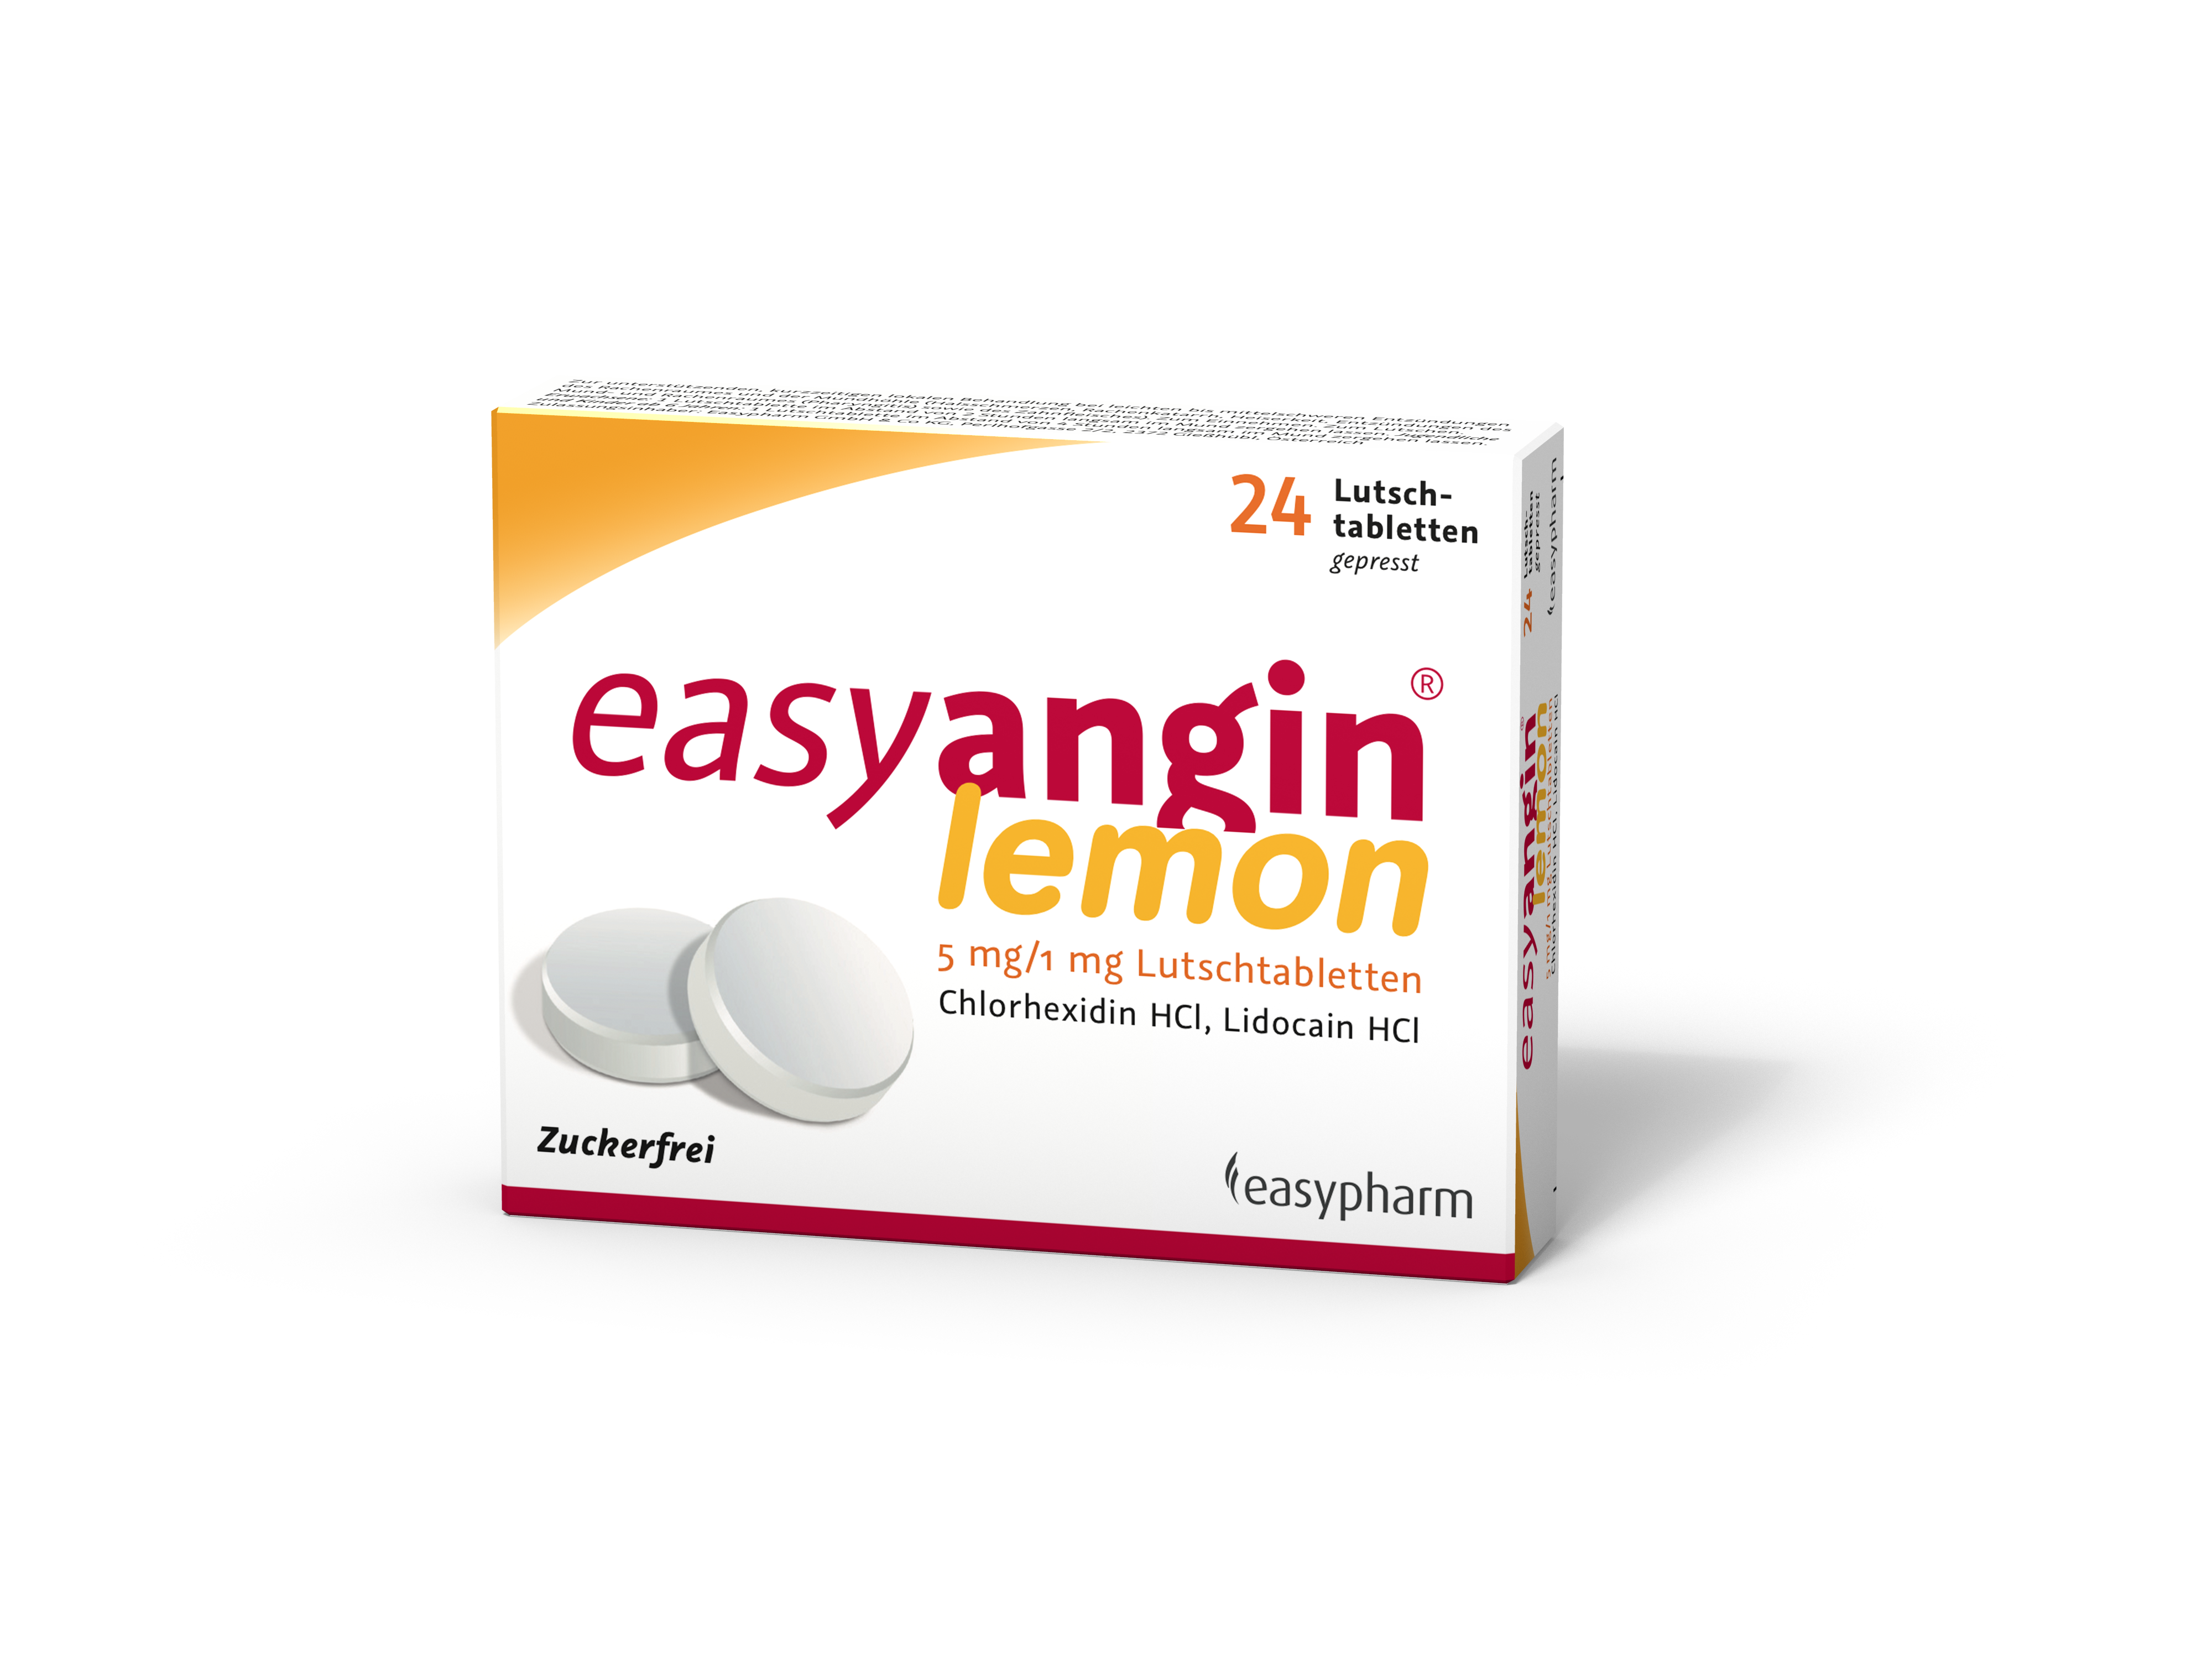 easyangin Zitronengeschmack 5 mg/1 mg - Lutschtabletten